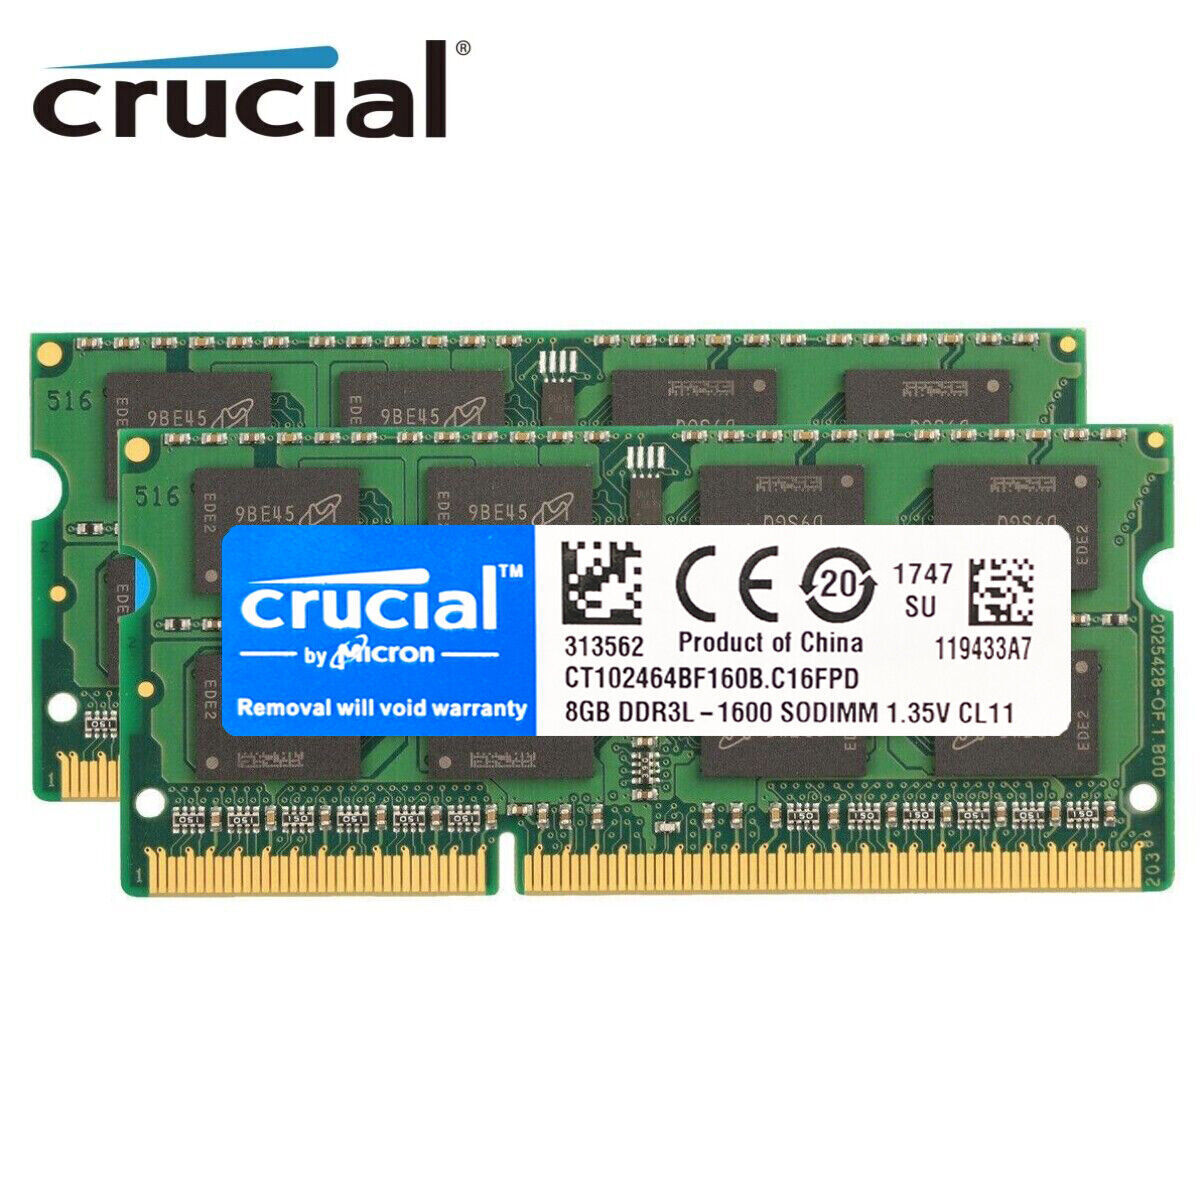 Crucial DDR3L 16GB 2x8GB 1600 MHZ PC3L-12800 Laptop RAM Sodimm Memory 1.35V 